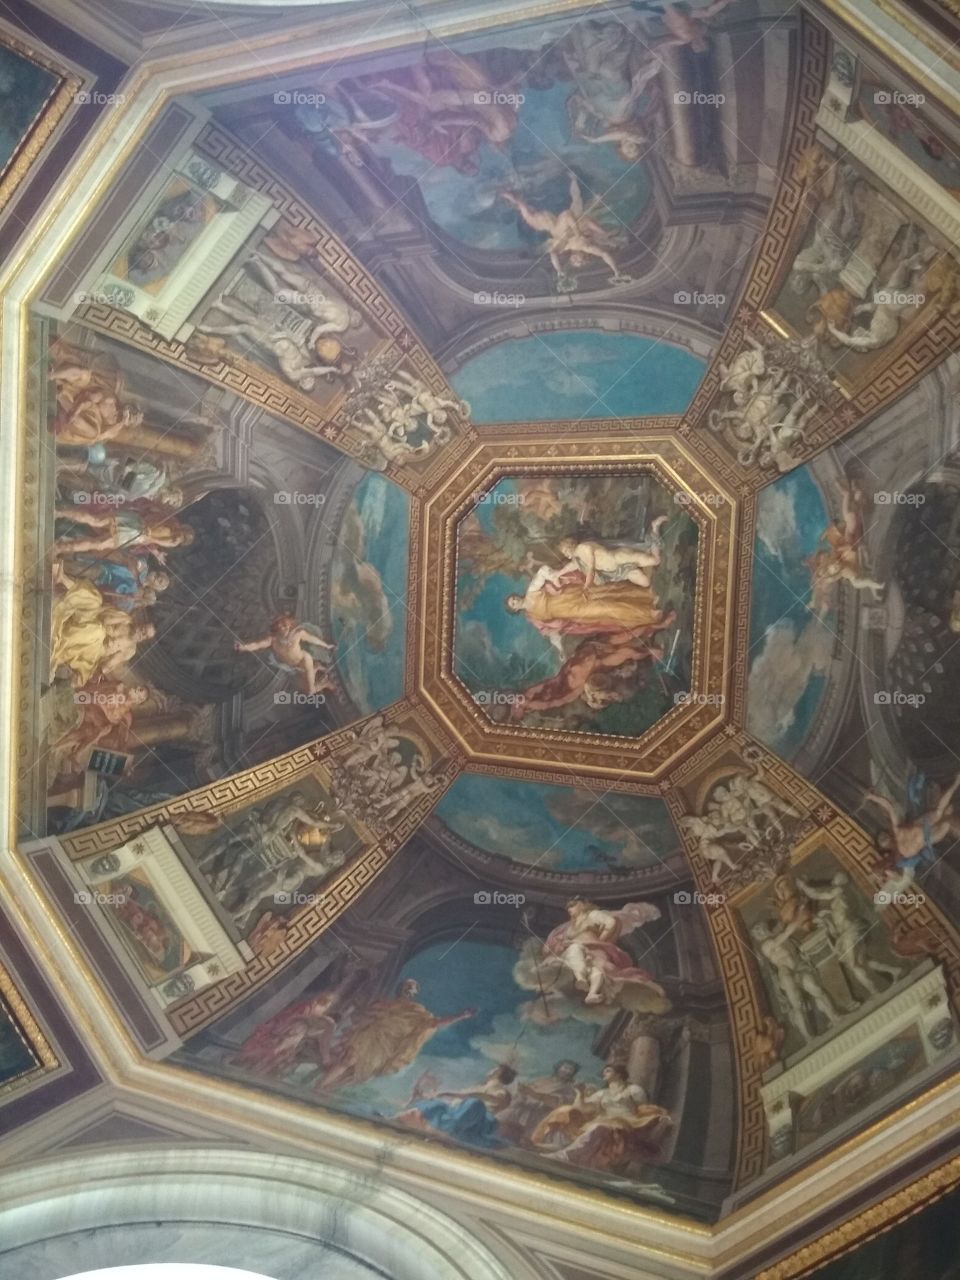 beautiful ceiling